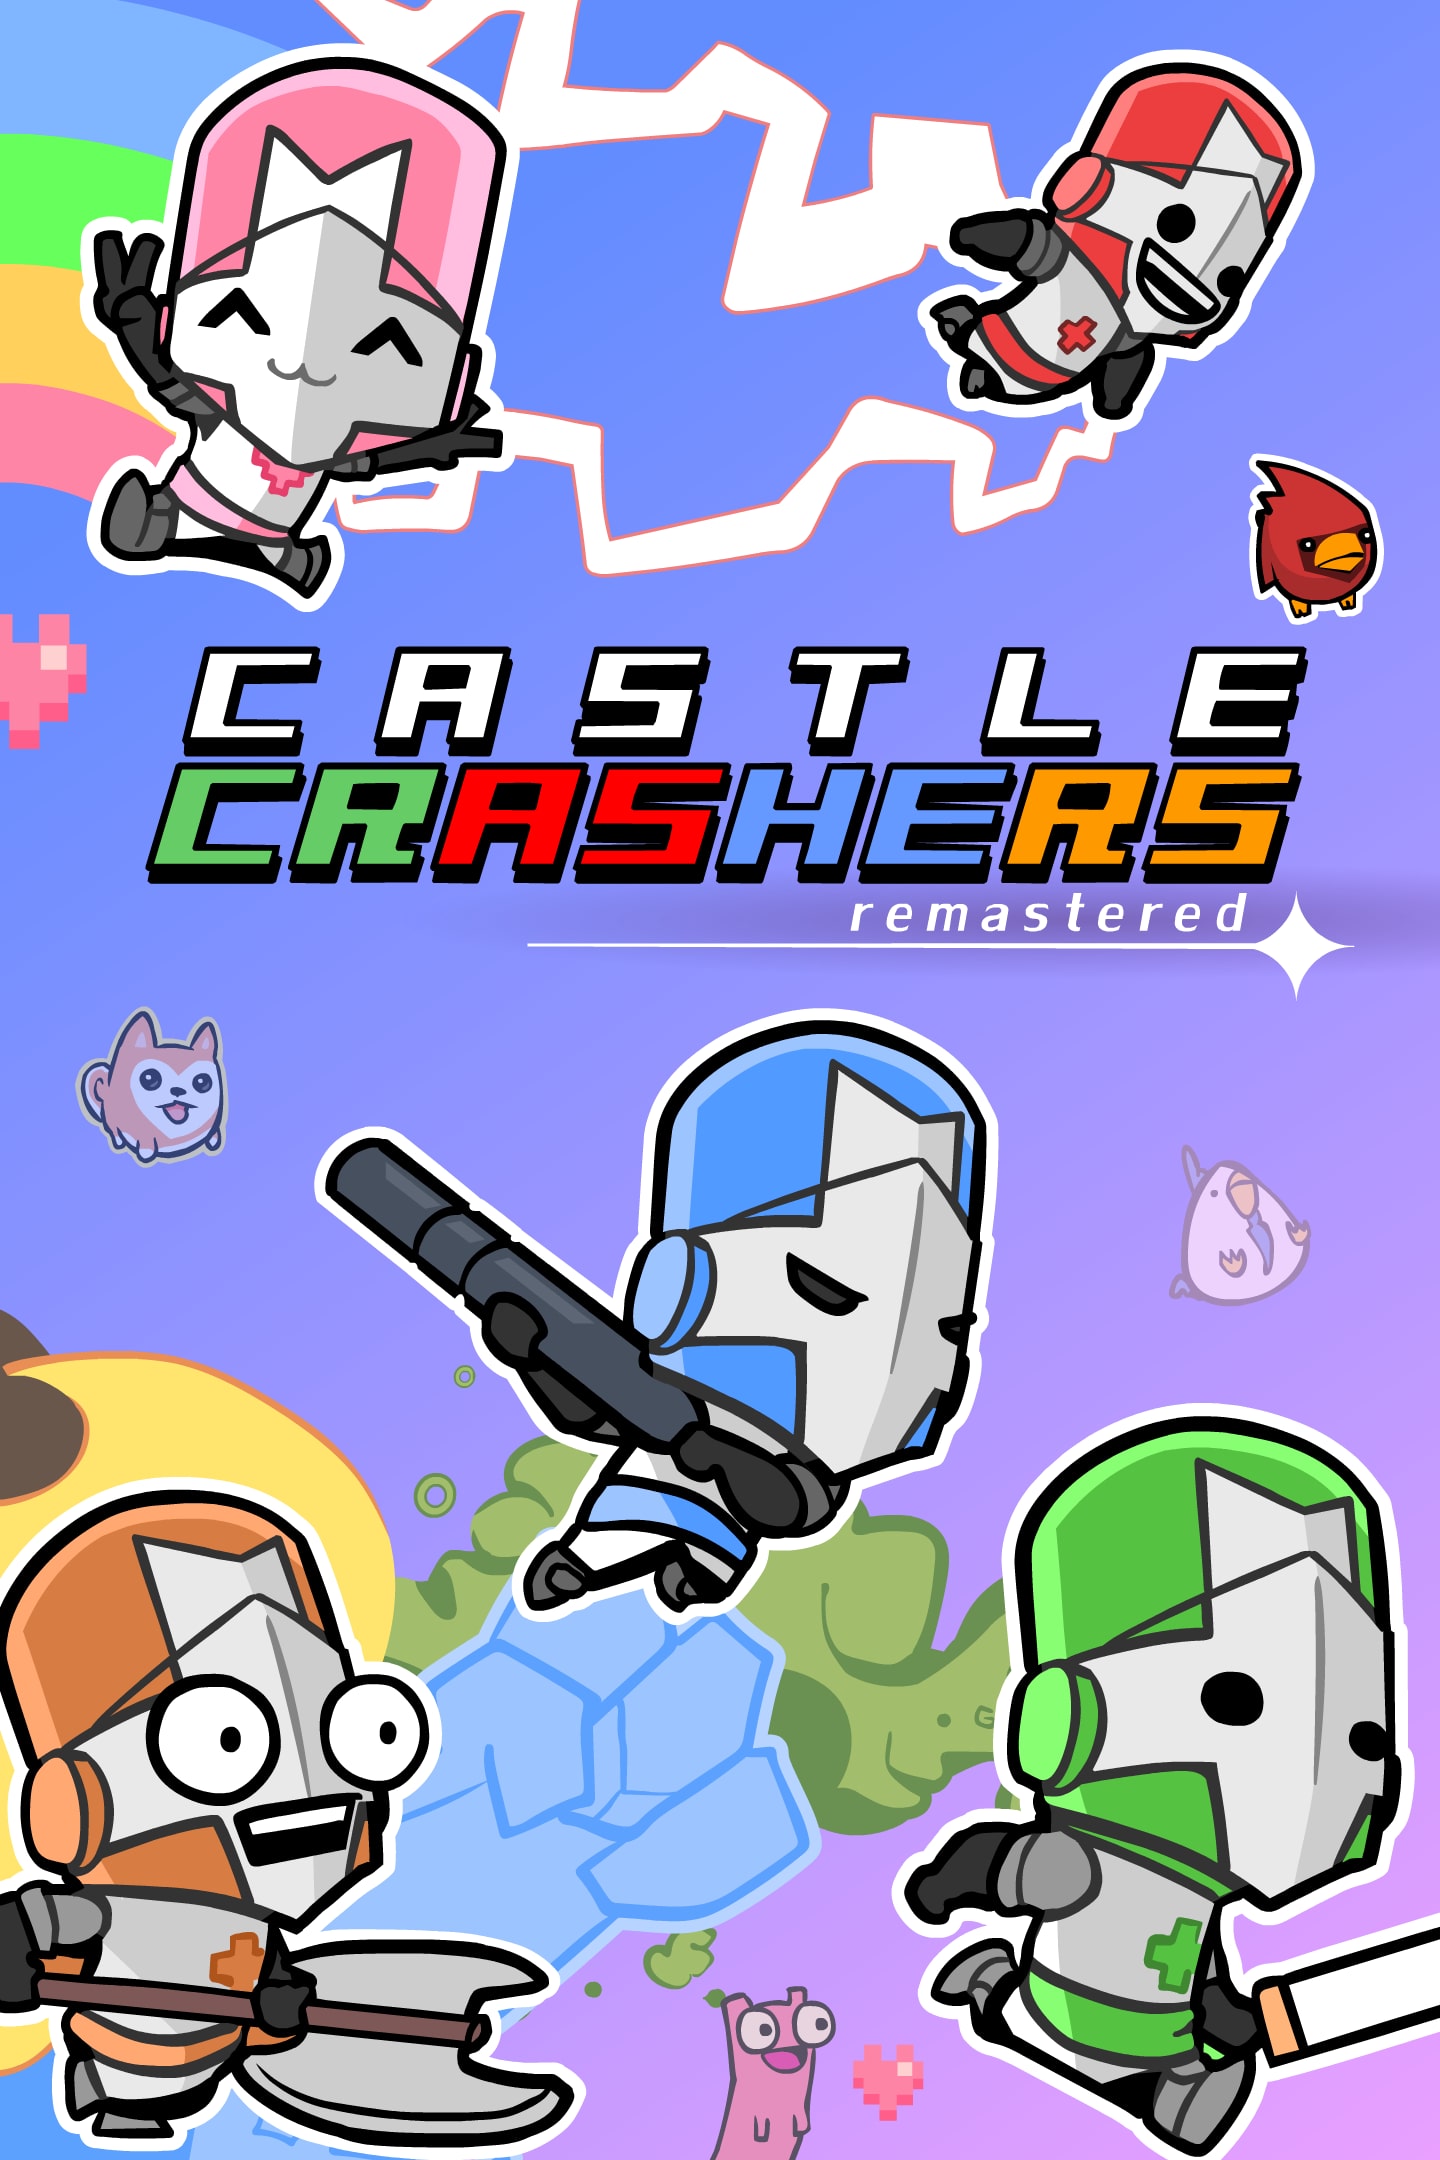 Castle Crasher PKG PS3 